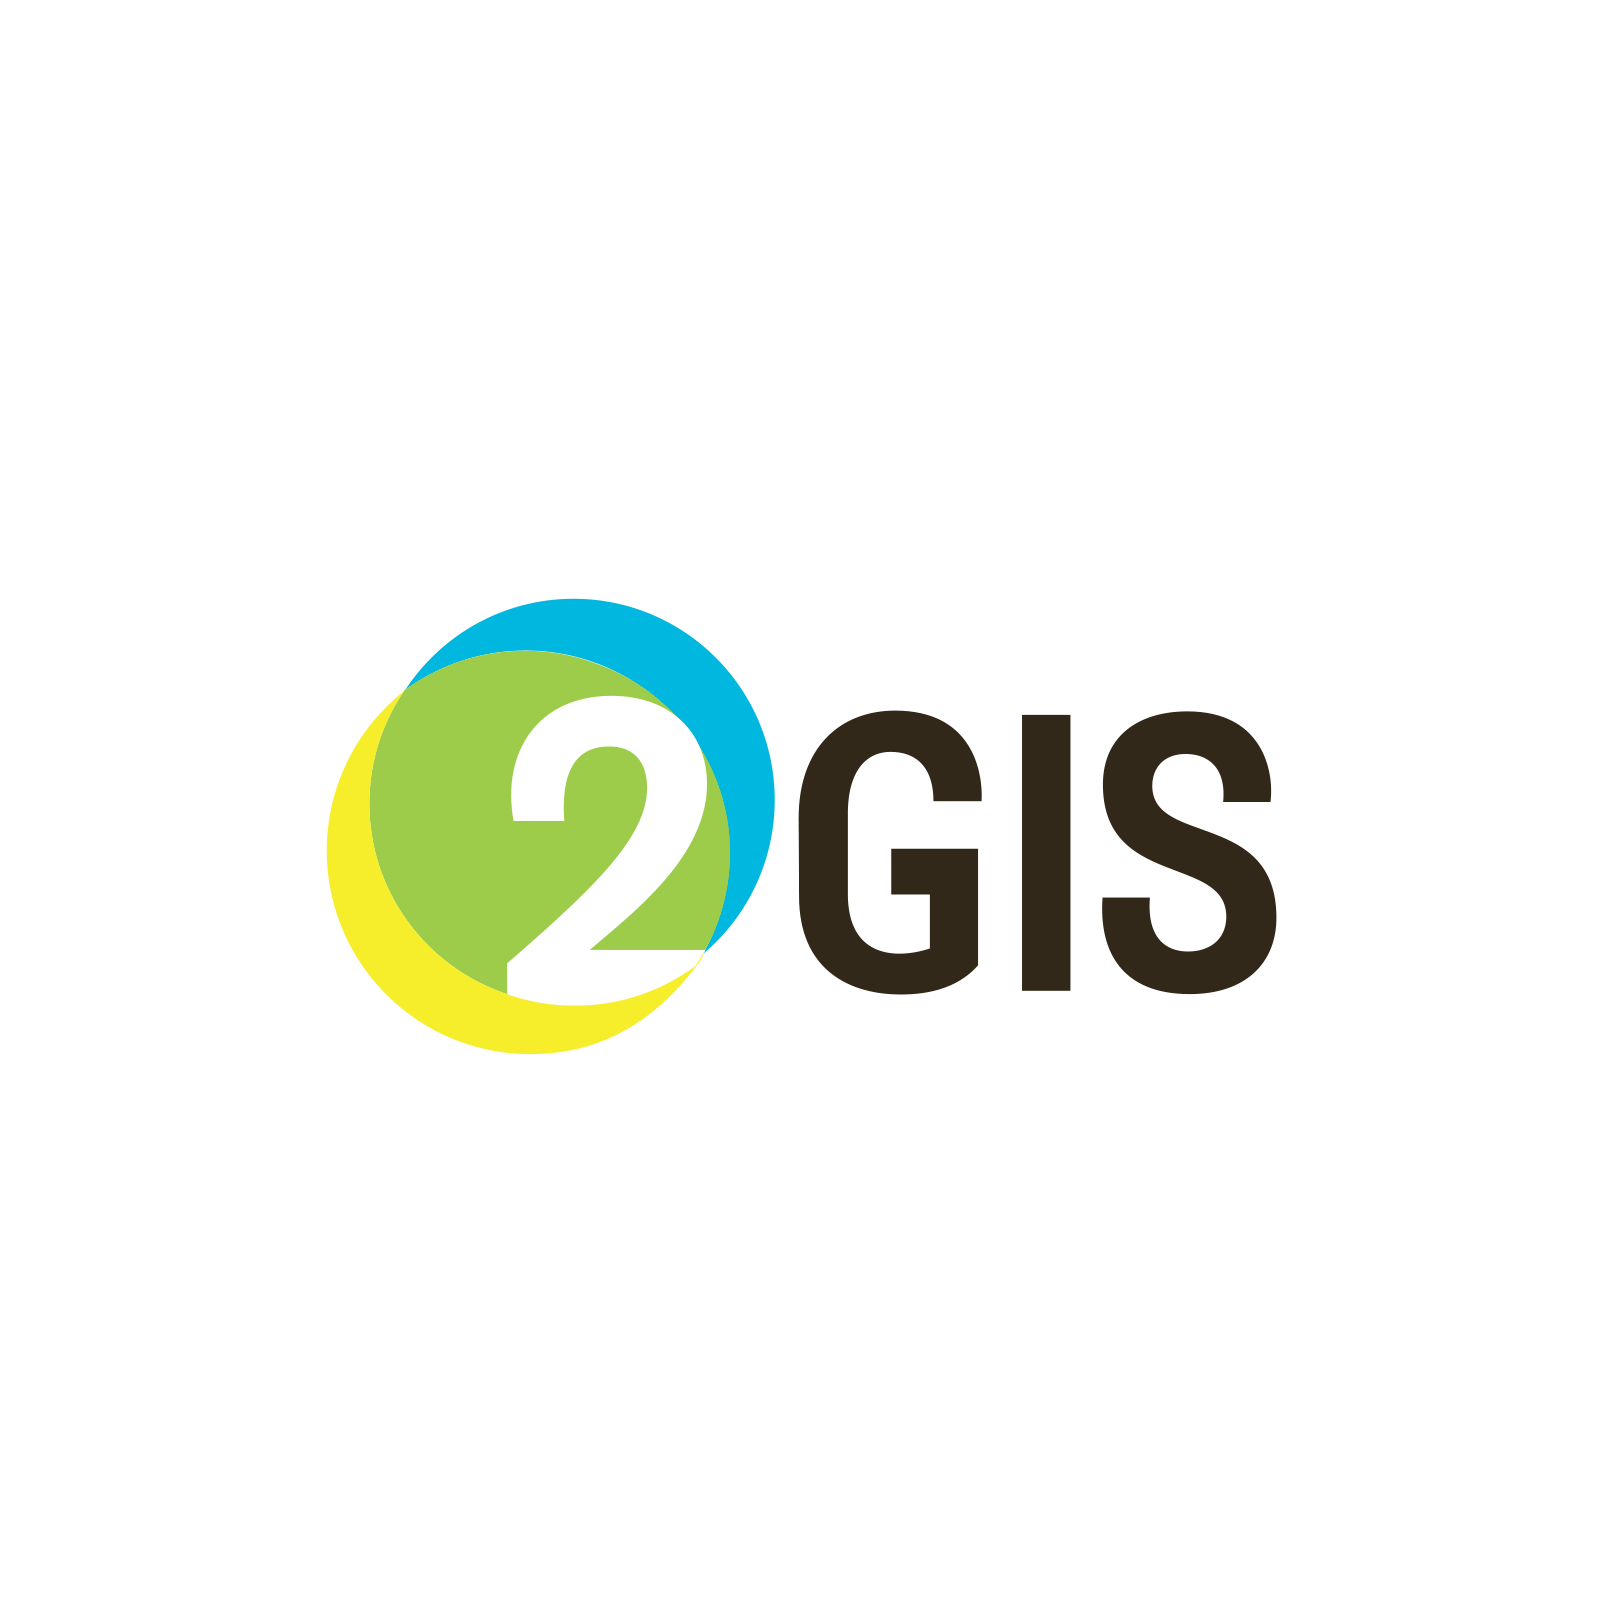 V gis ru. 2gis логотип круглый. 2гис логотип PNG 5 звезд.